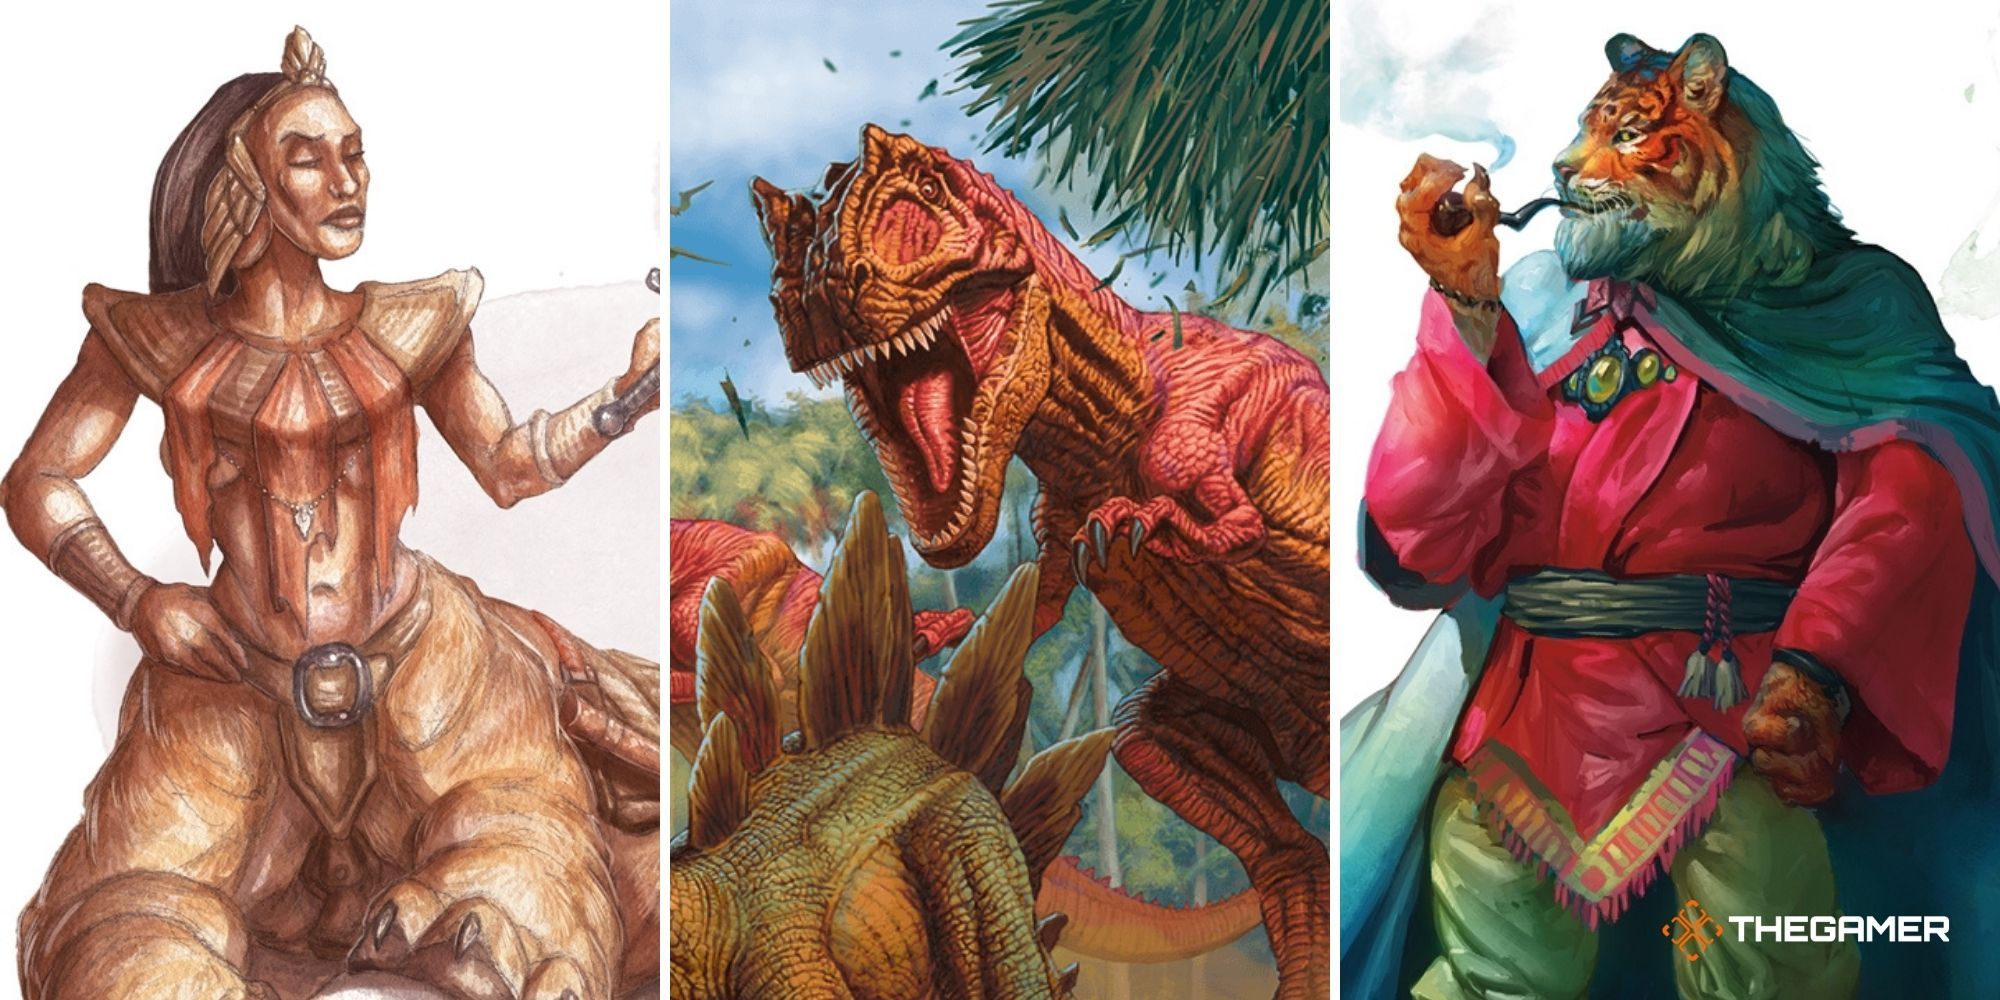 Dungeons and Dragons split image - Lami on left, Dinosaurs in centre, Rakshasa on right